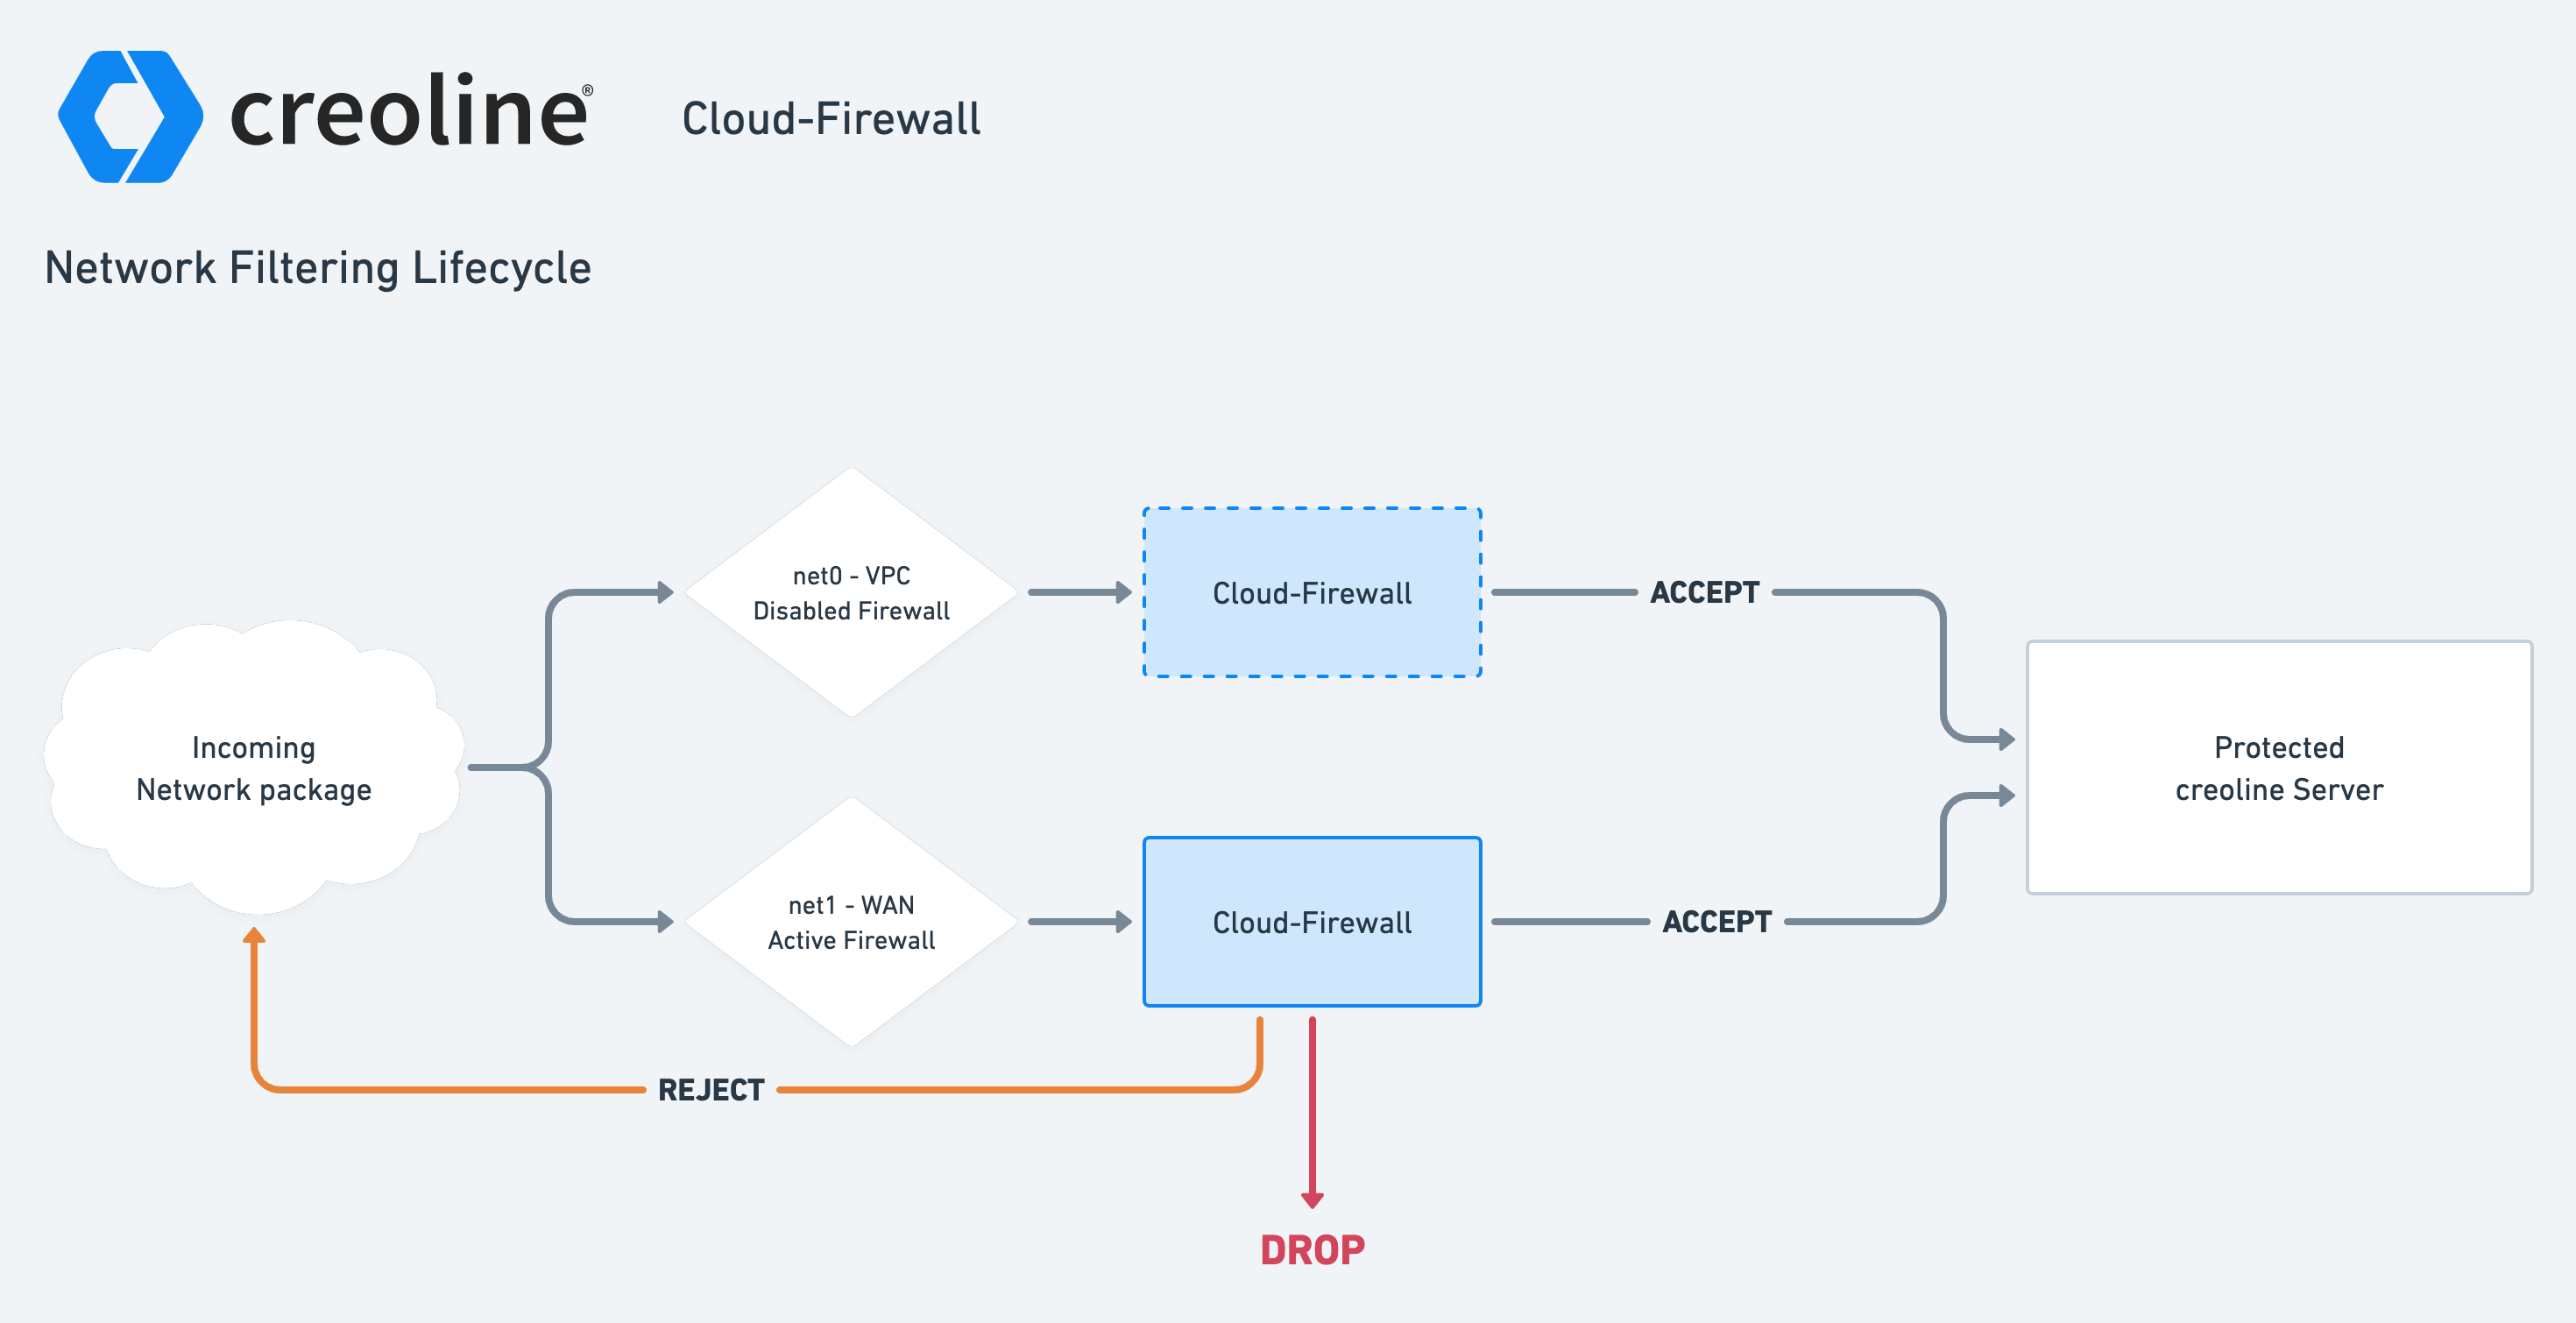 creoline Cloud-Firewall